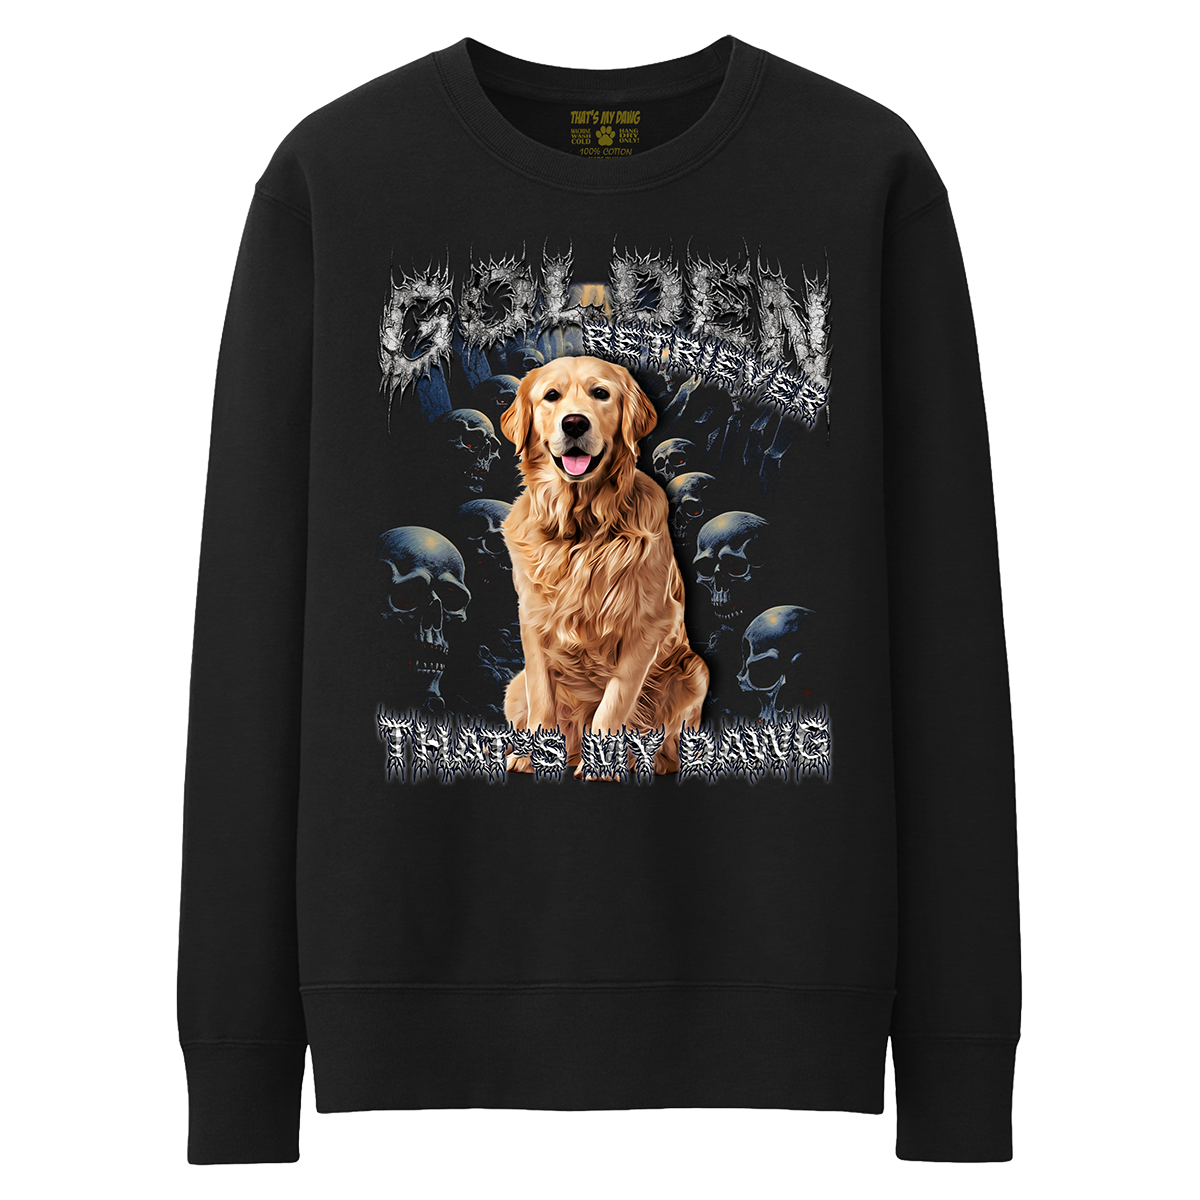 90's Style Golden Retriever Crewneck Sweaters